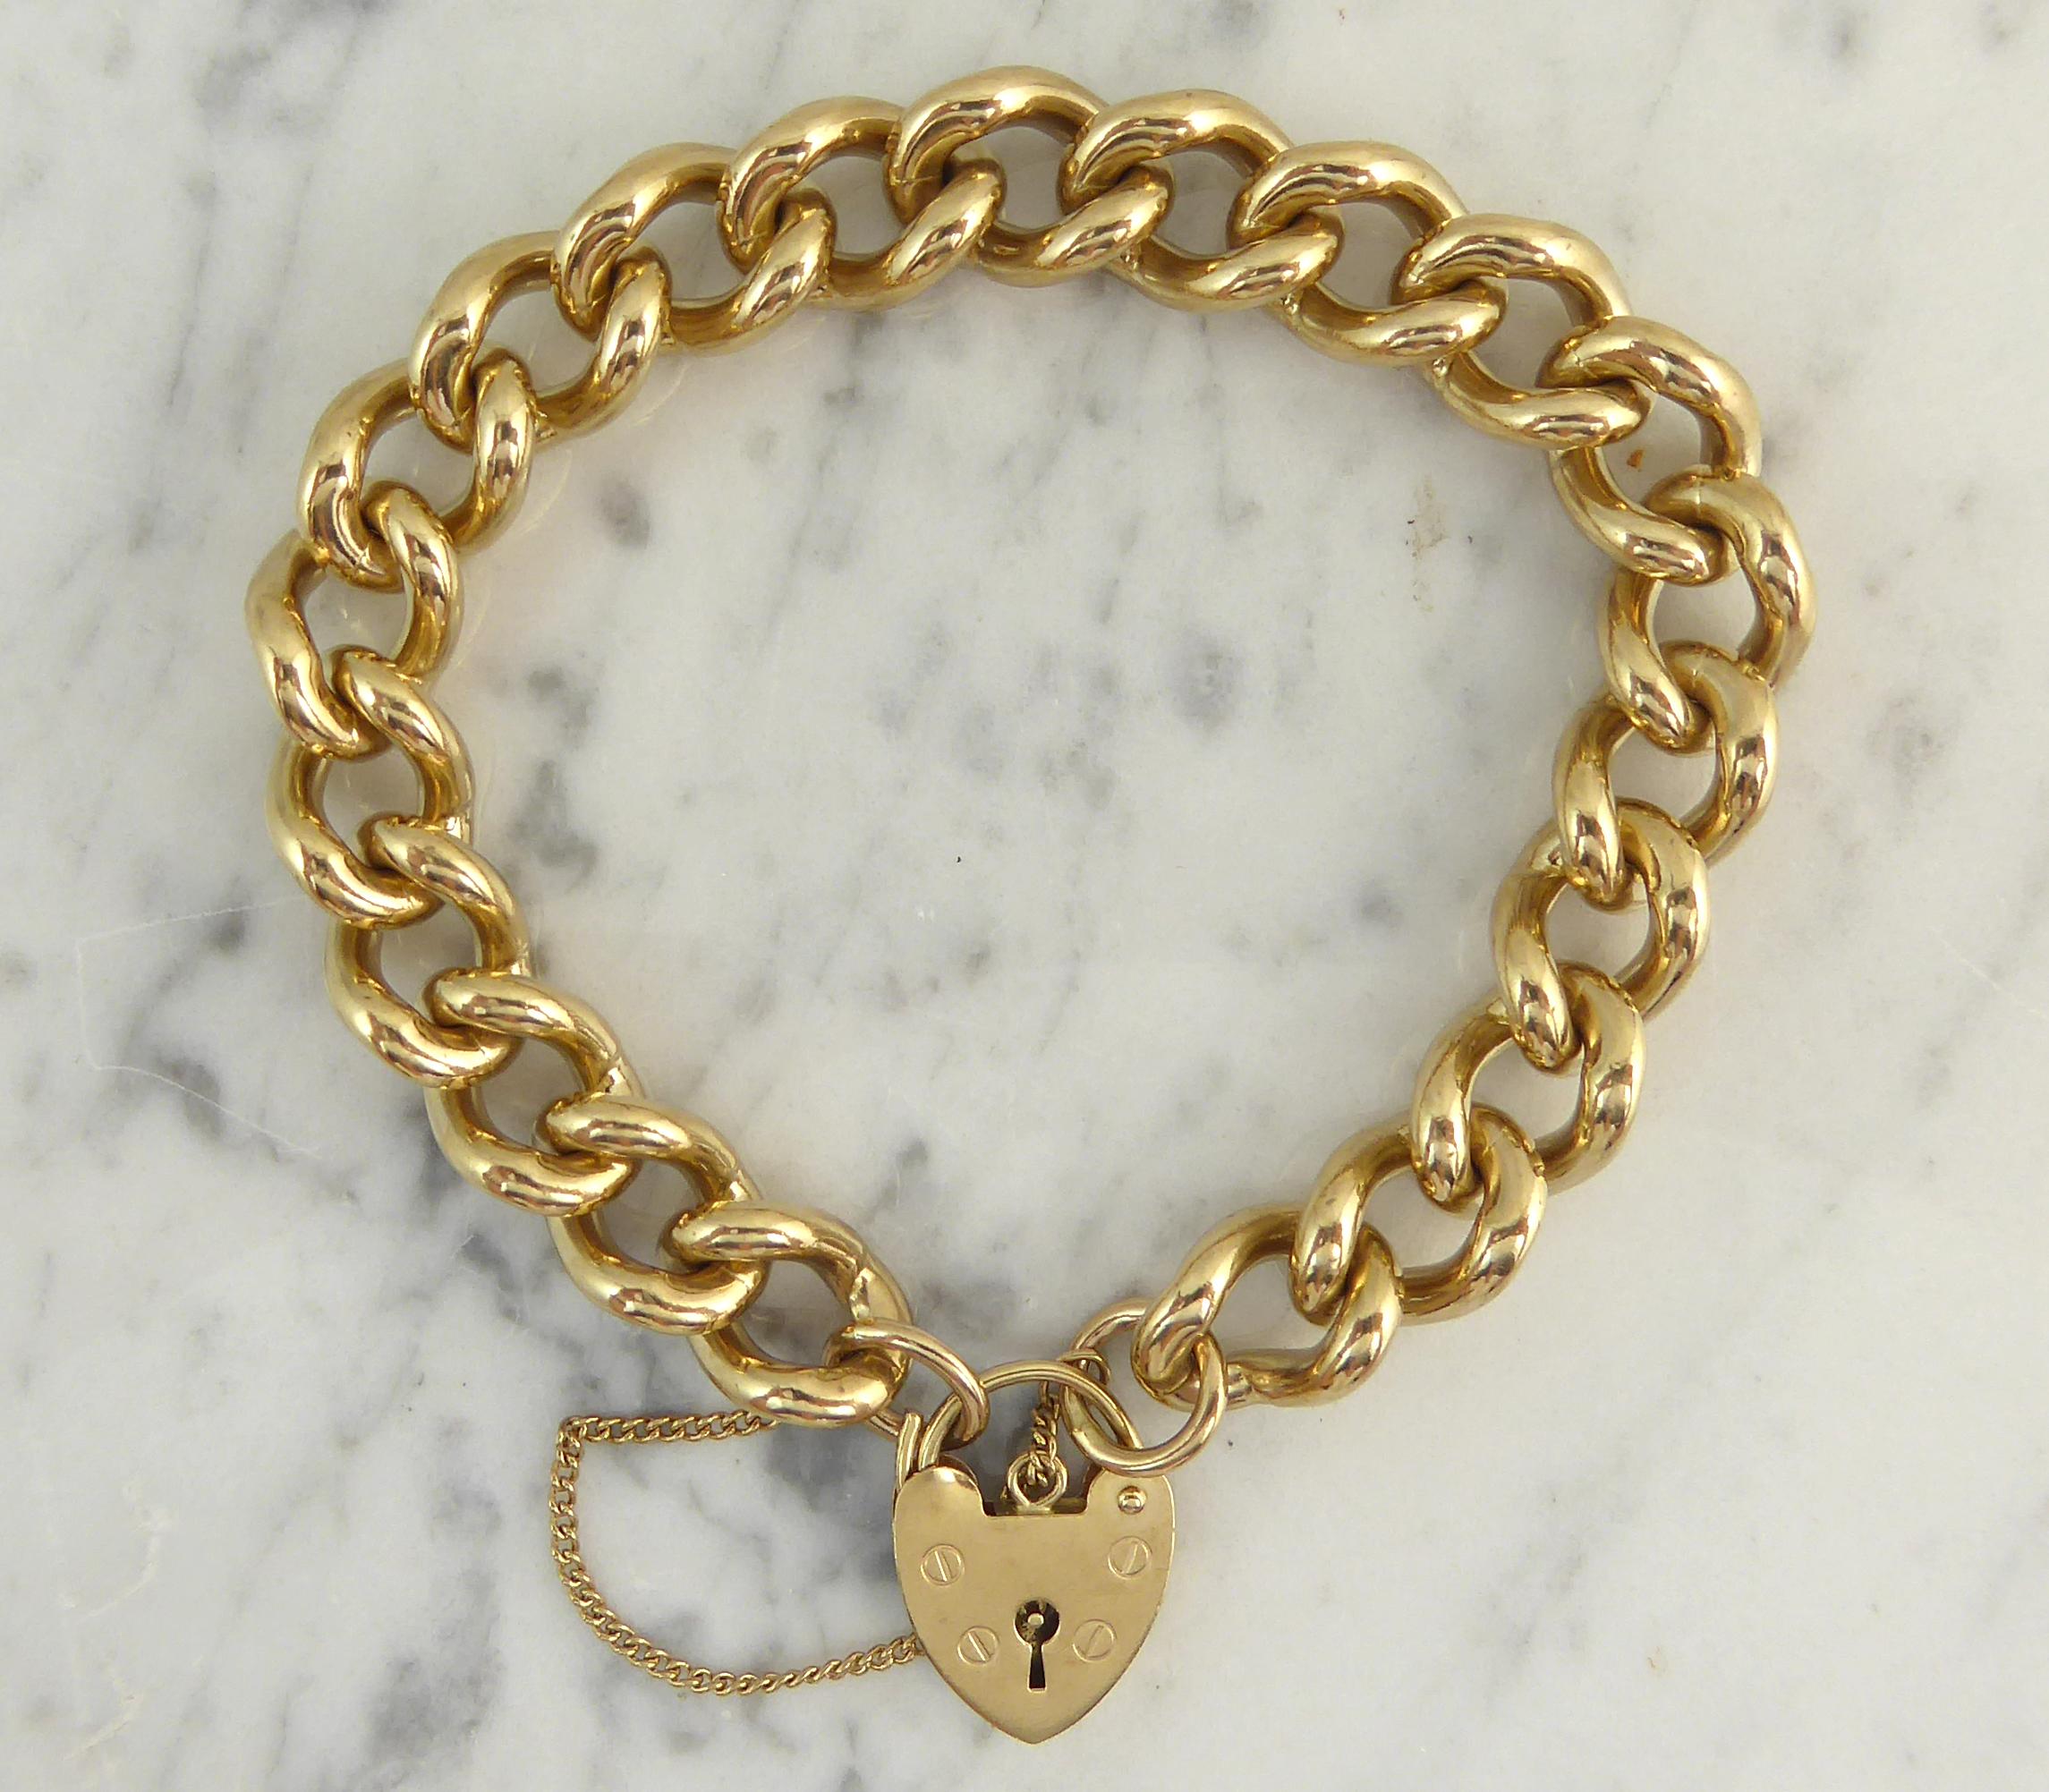 Modern Woman's or Men's Vintage Gold Curb Link Bracelet, Padlock Closure, Yellow Gold